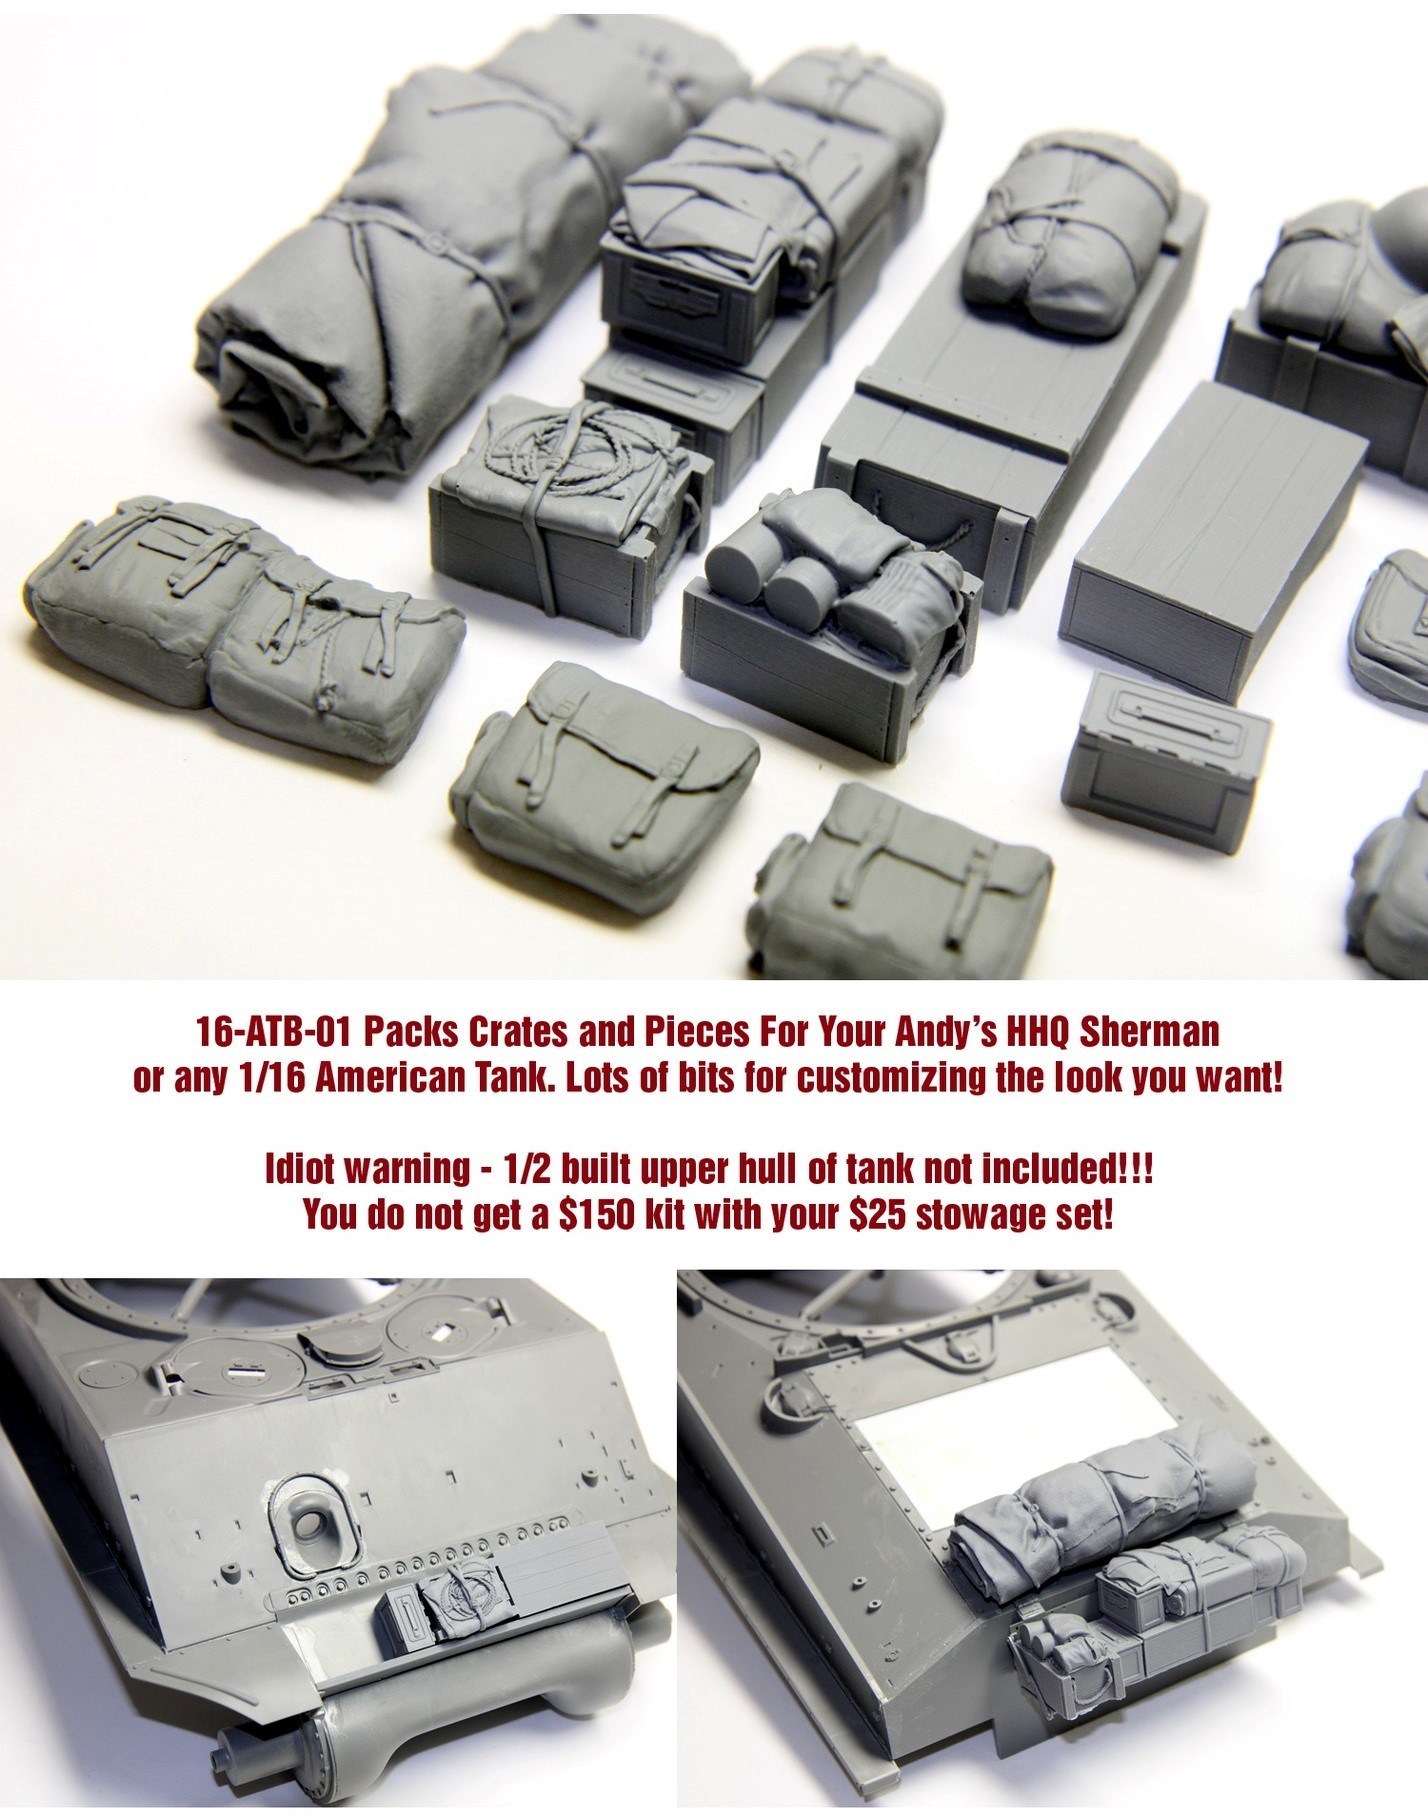 16-ATB-01 Allied Tank Bits #1